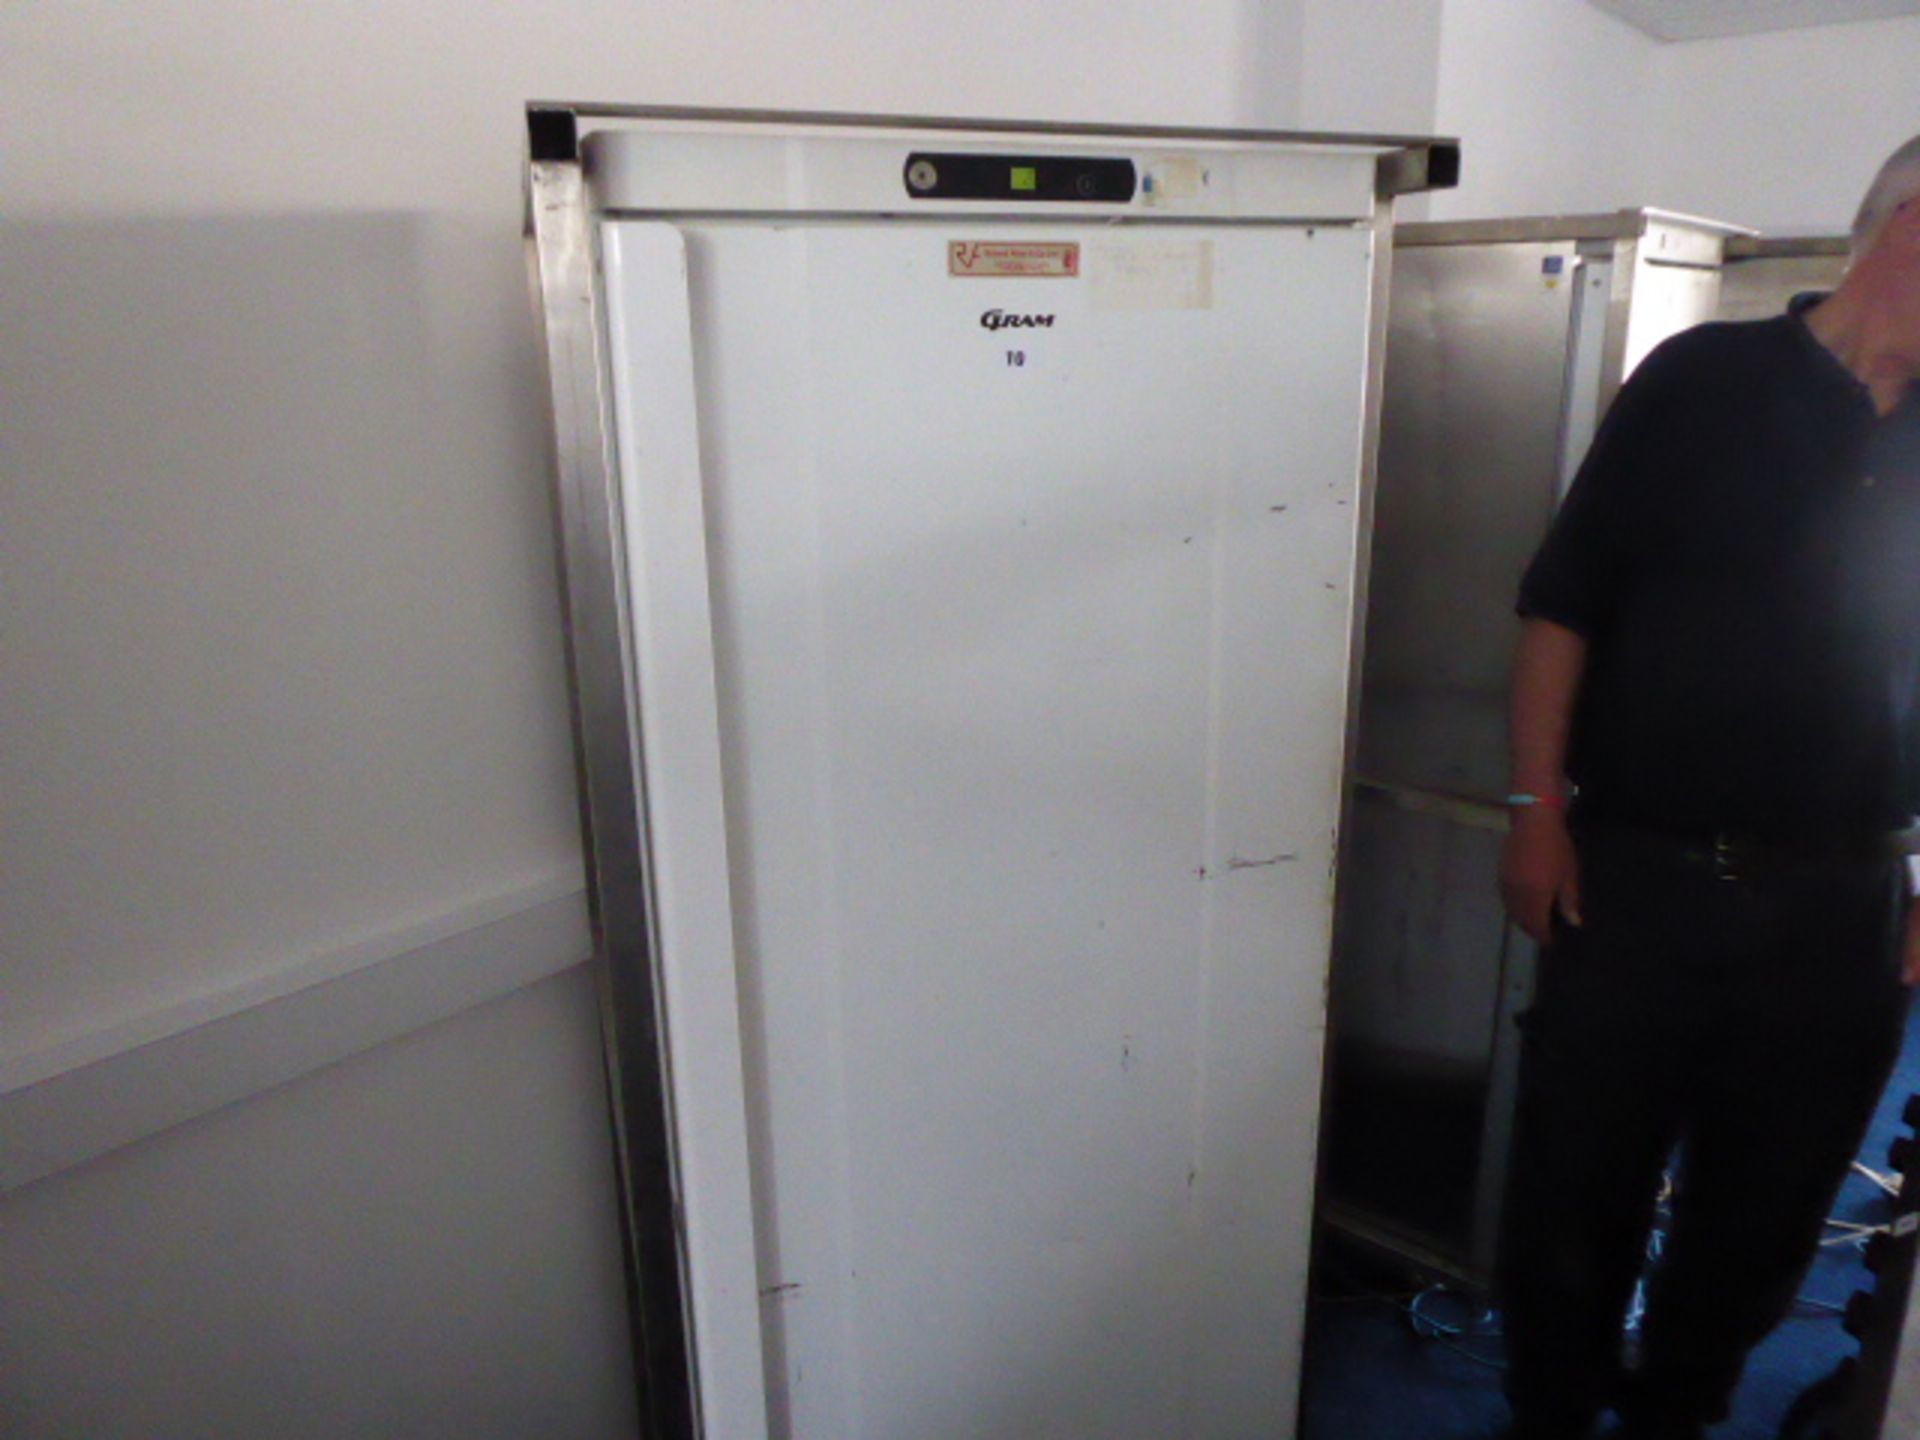 67cm Gram single door fridge in mobile cage